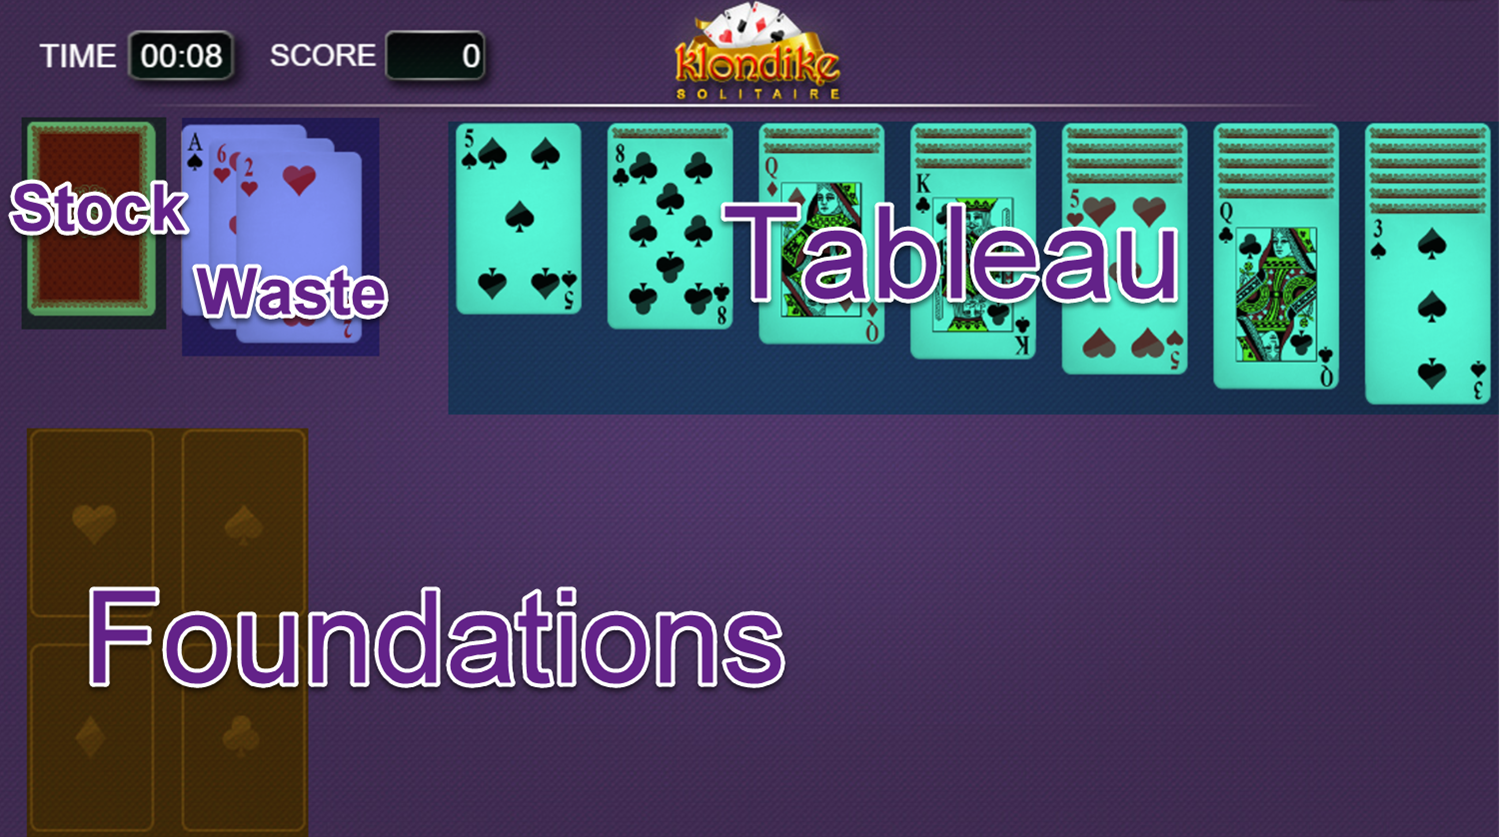 msn free online klondike solitaire turn 3